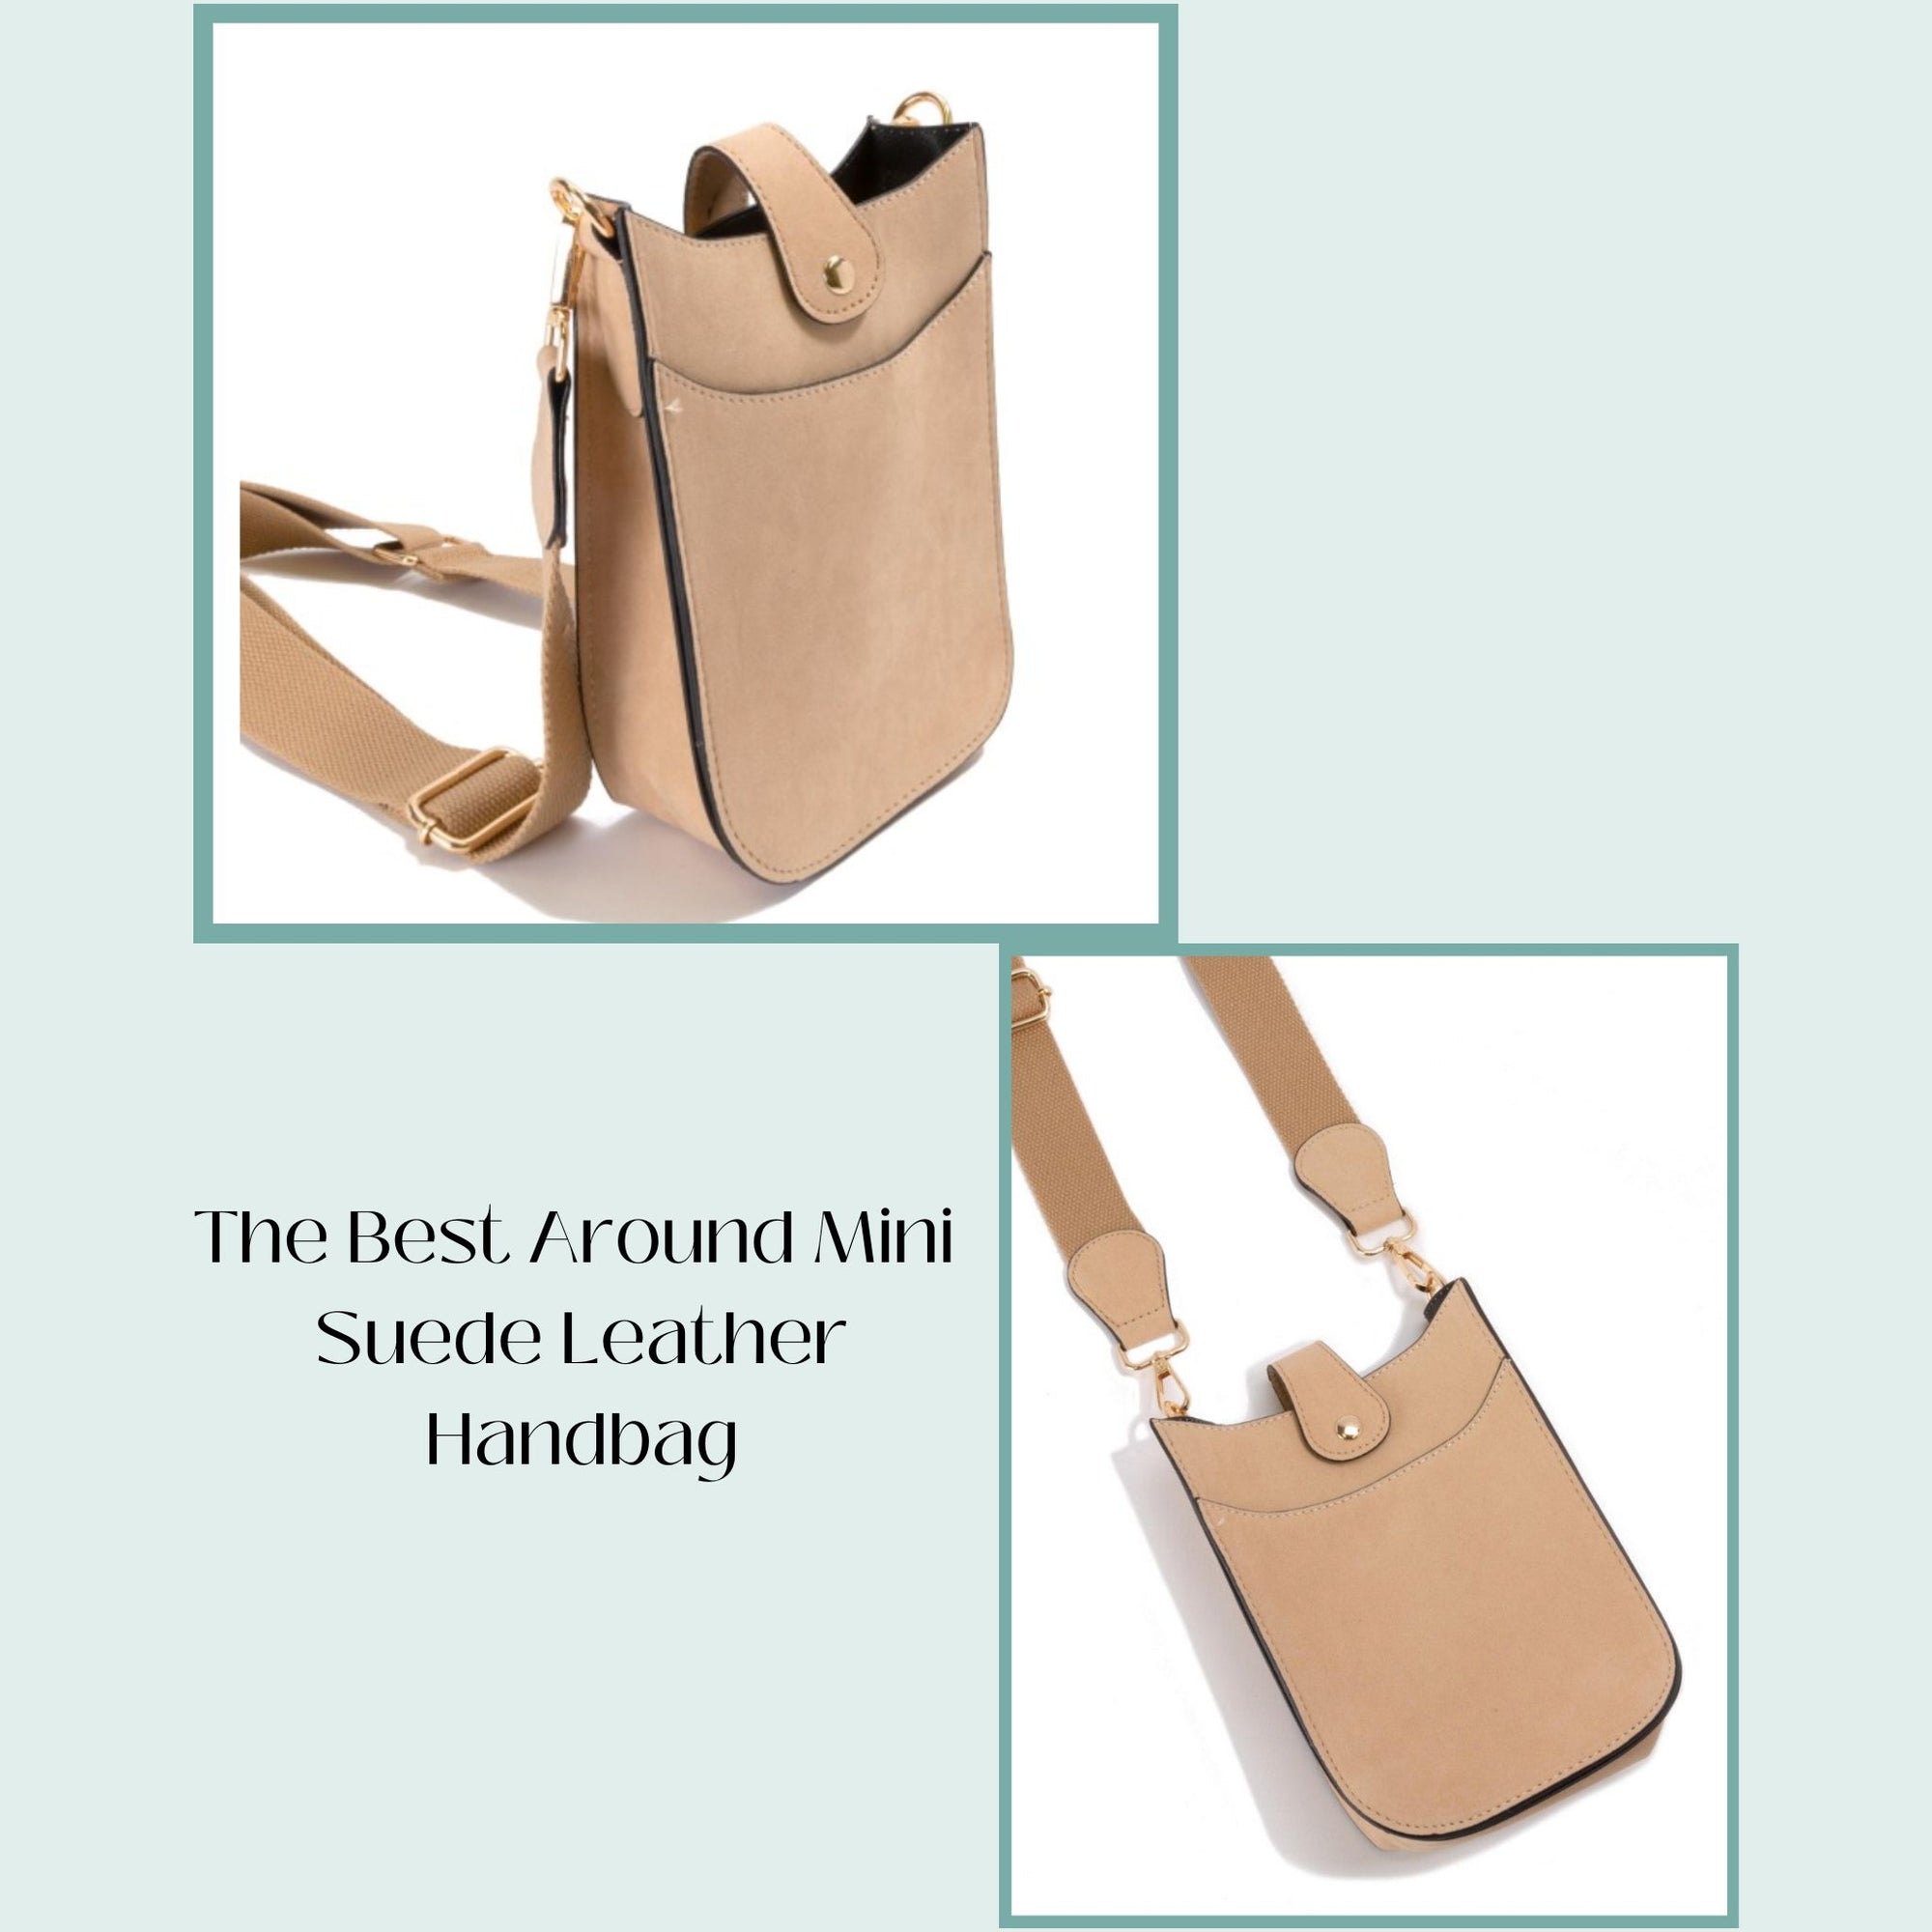 The Best Around Mini Suede Leather Handbag